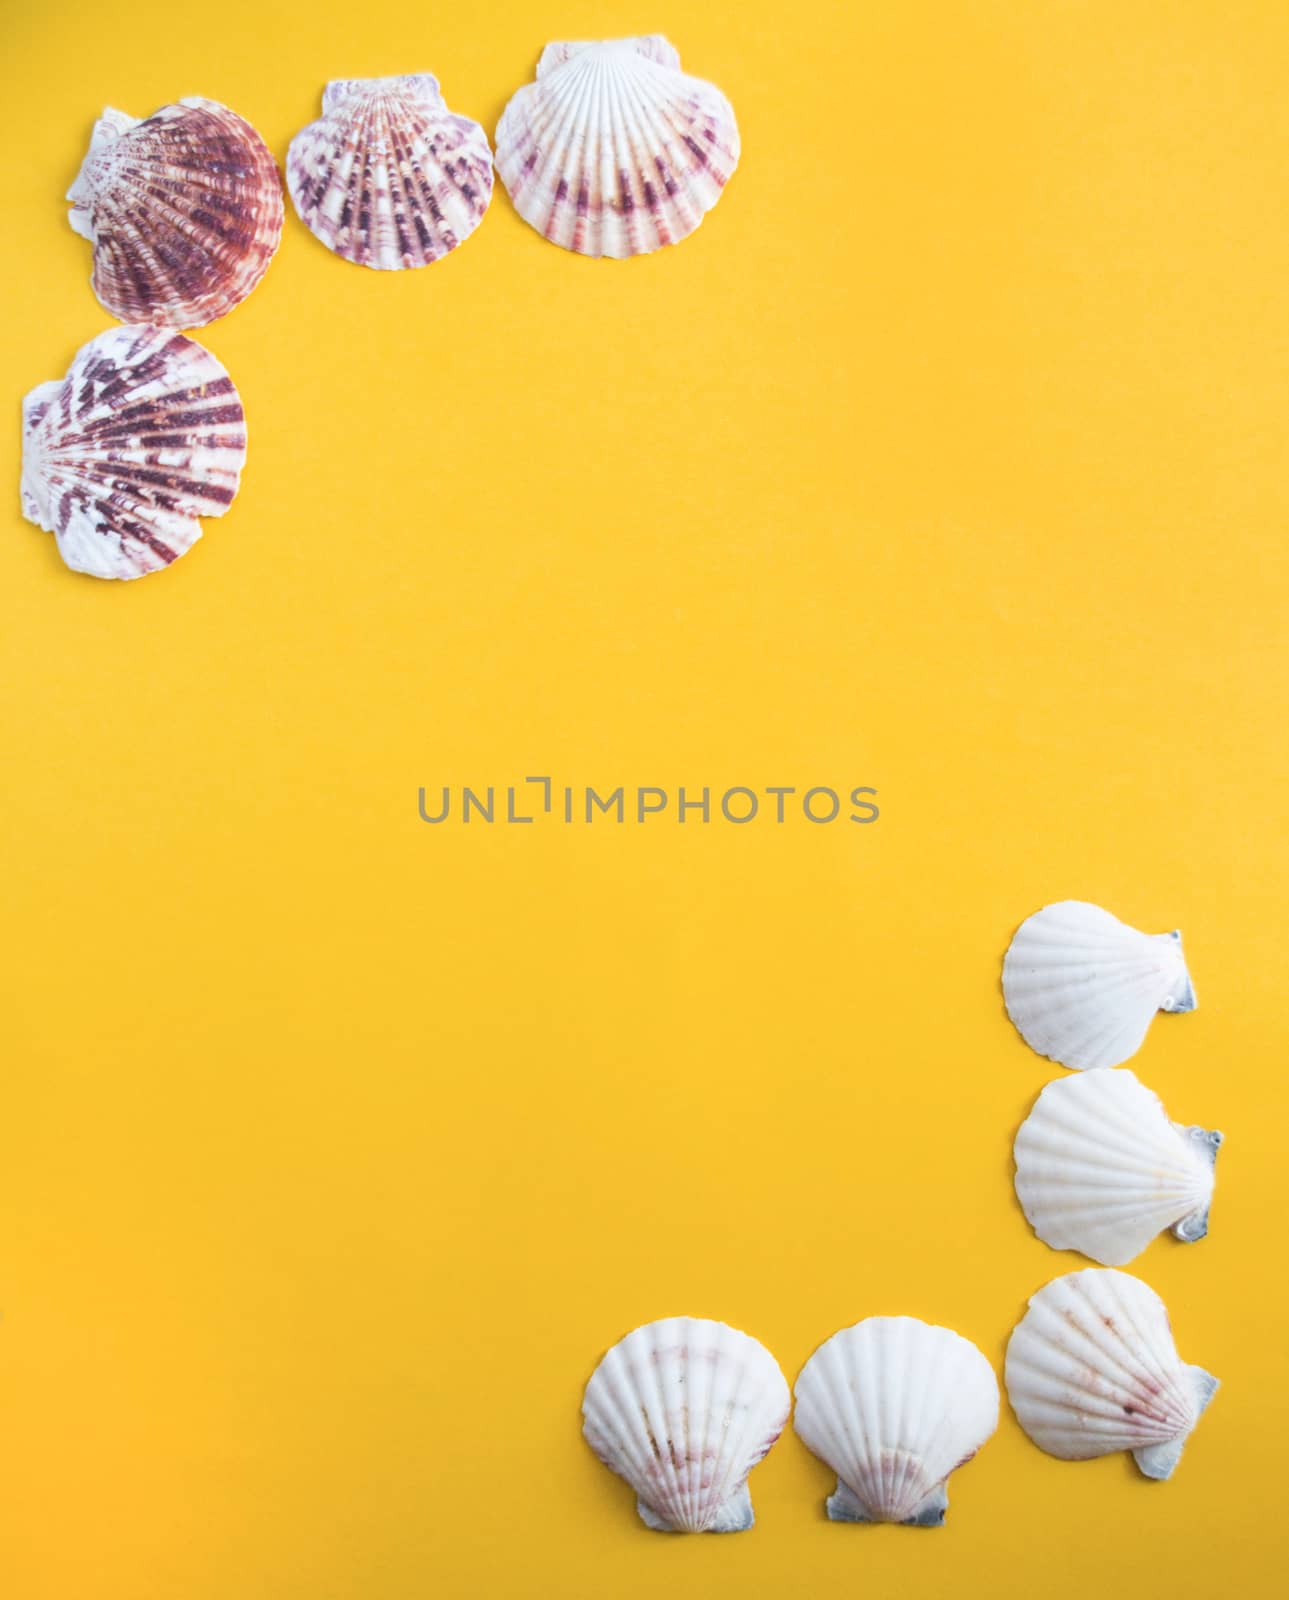 Seashells in the corners of the yellow background like a beach